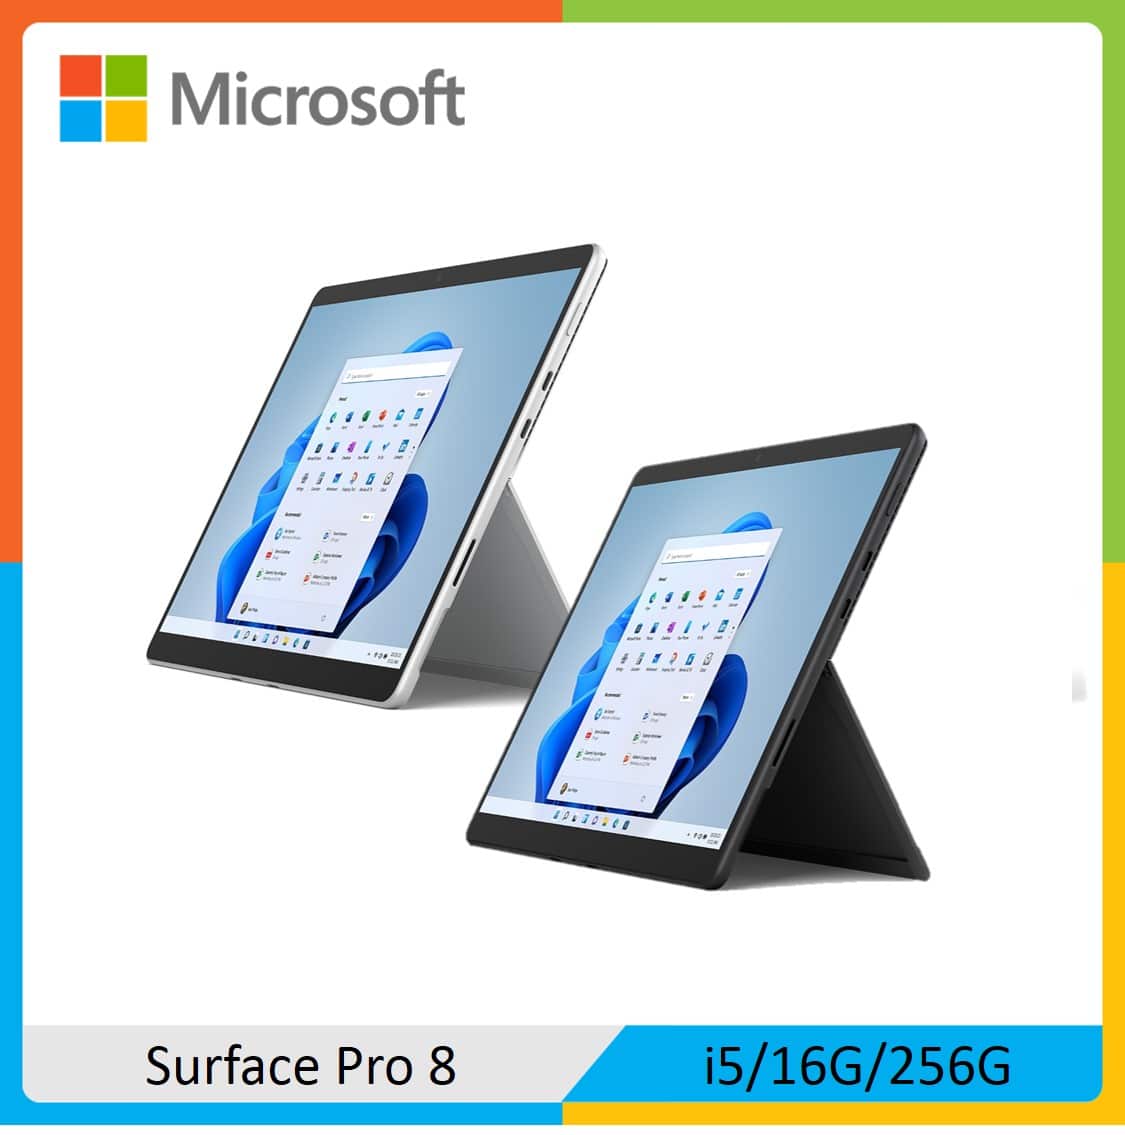 Microsoft 微軟 Surface Pro 8 (i5/16G/256G) 兩色選